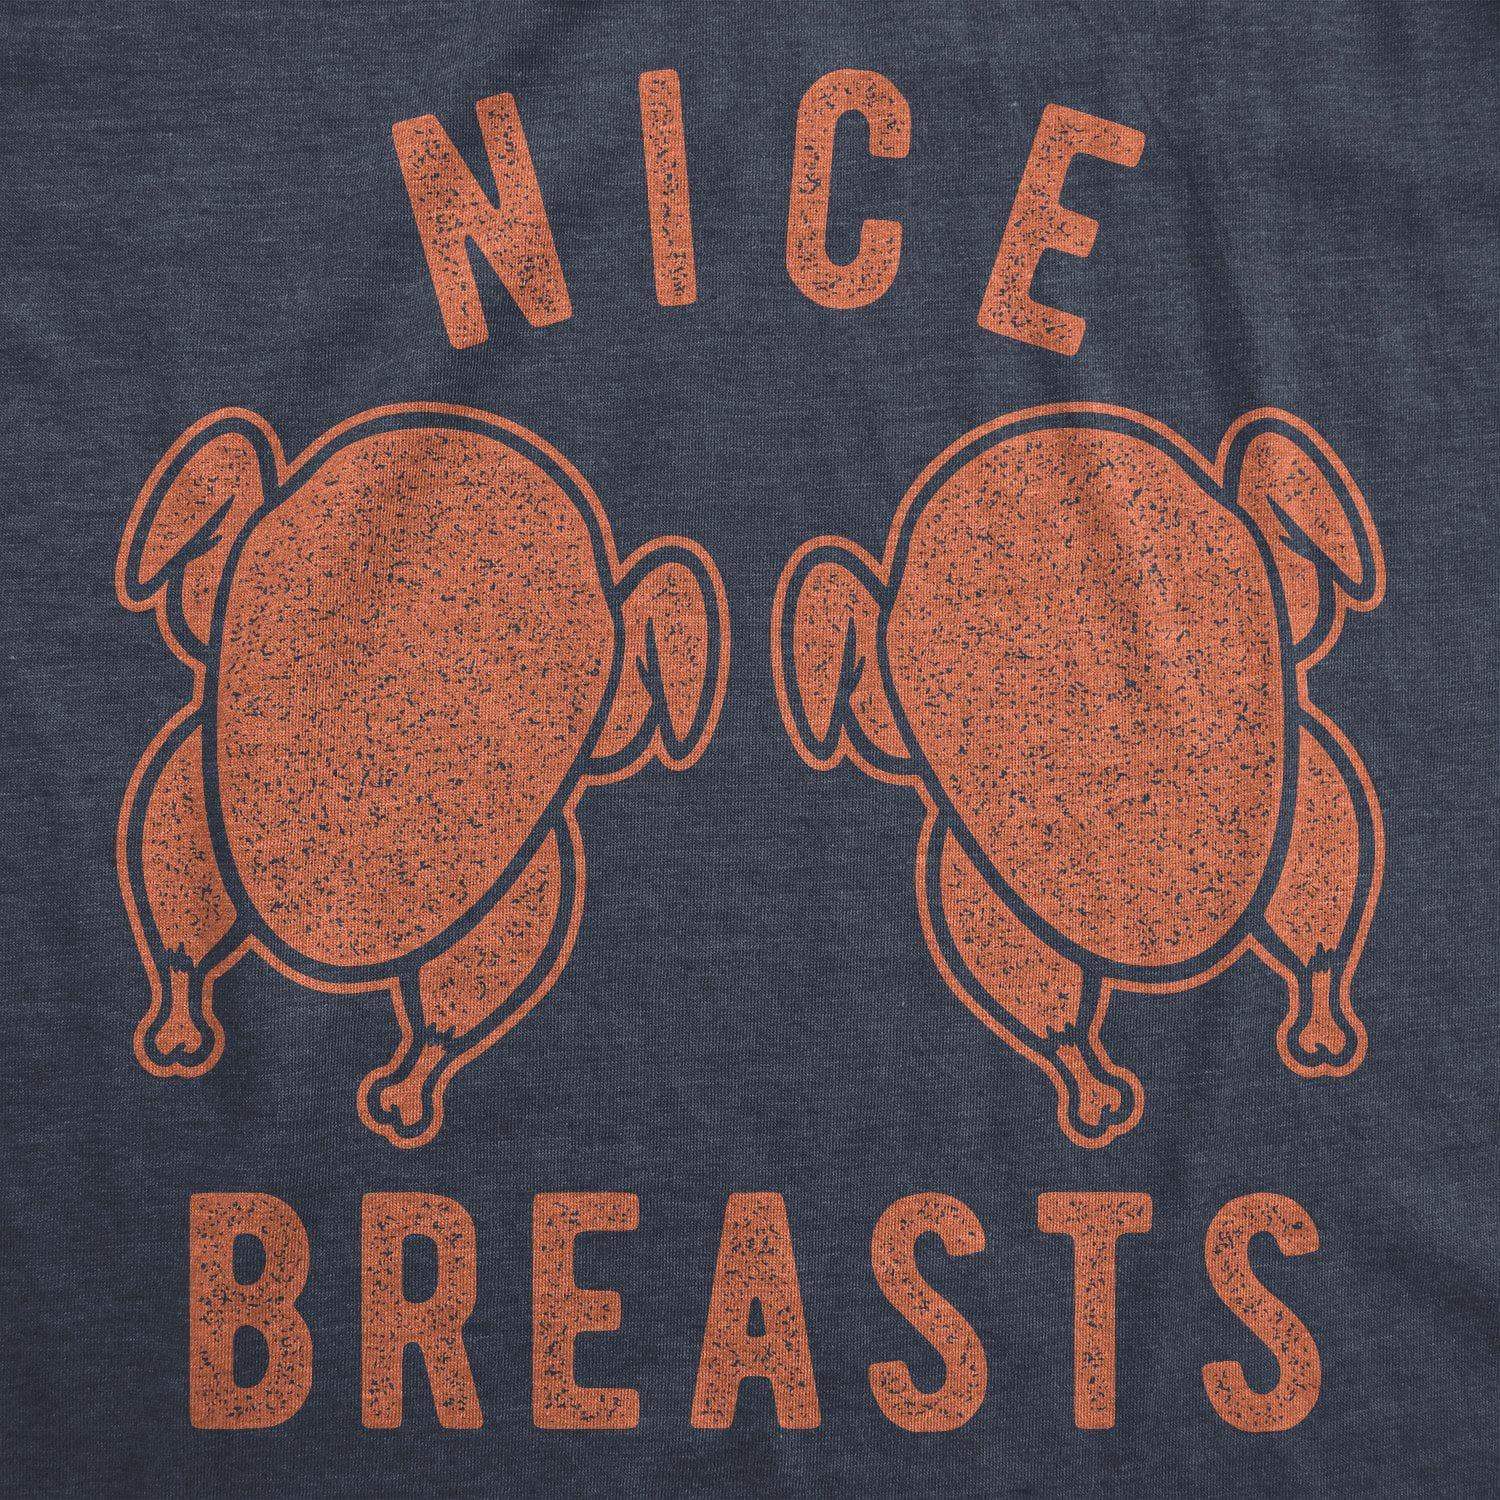 Nice Turkey Breasts Men's Tshirt - Crazy Dog T-Shirts